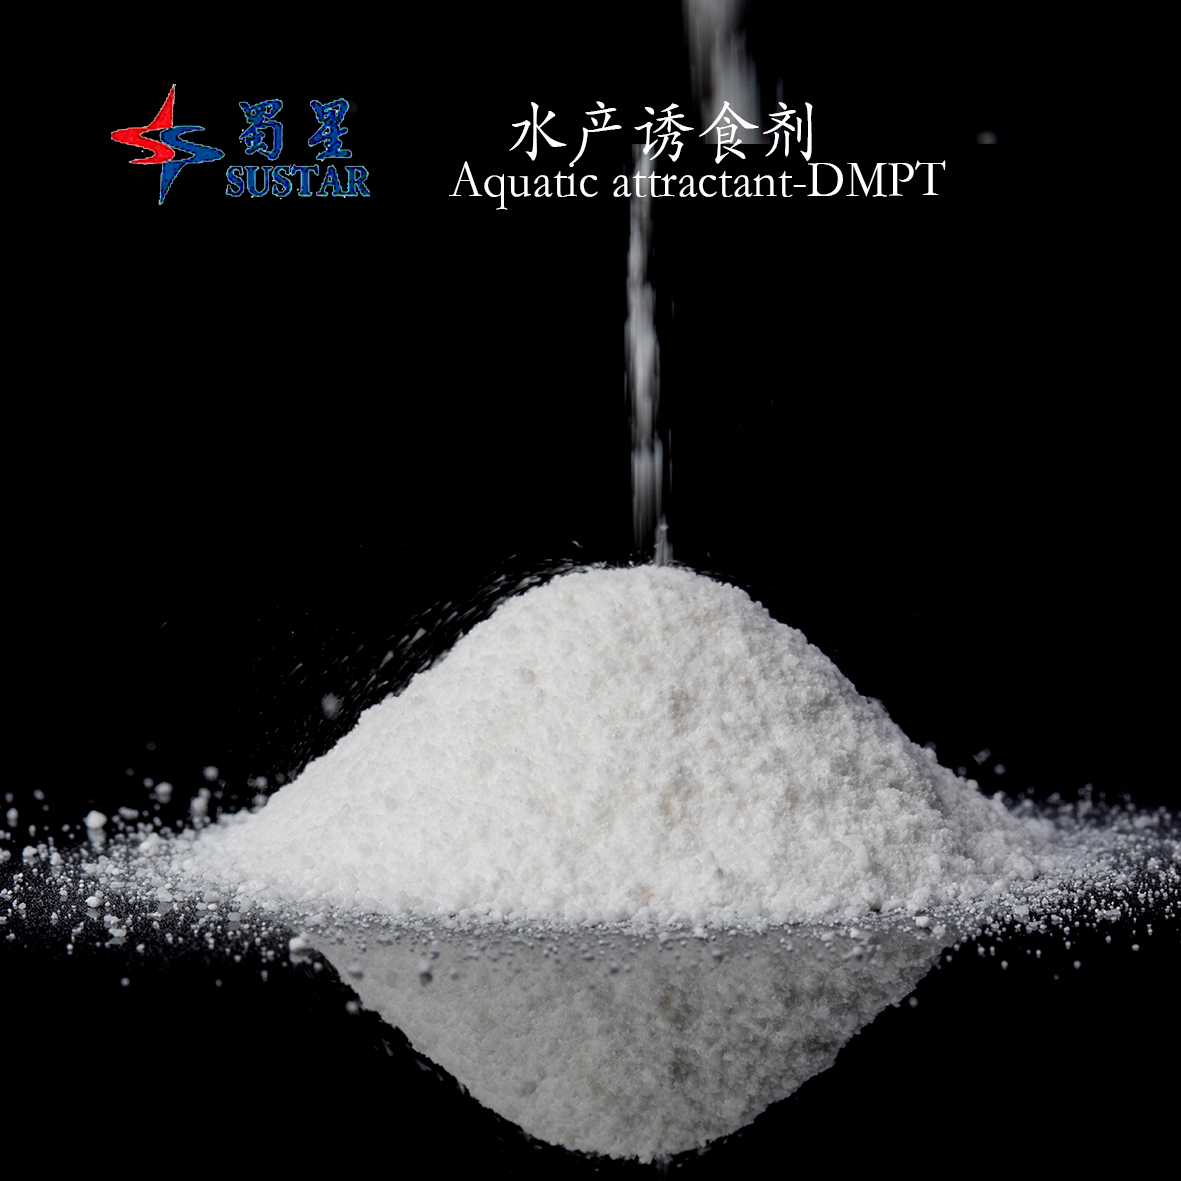 DMPT Dimethyl-Beta-Propiothetin Aquapro Attractant akwatik (2-Carboxyethyl) dimethylsulfonium chloride s,s-Dimethyl-β-propionic asid thetine White Crystalline Powder